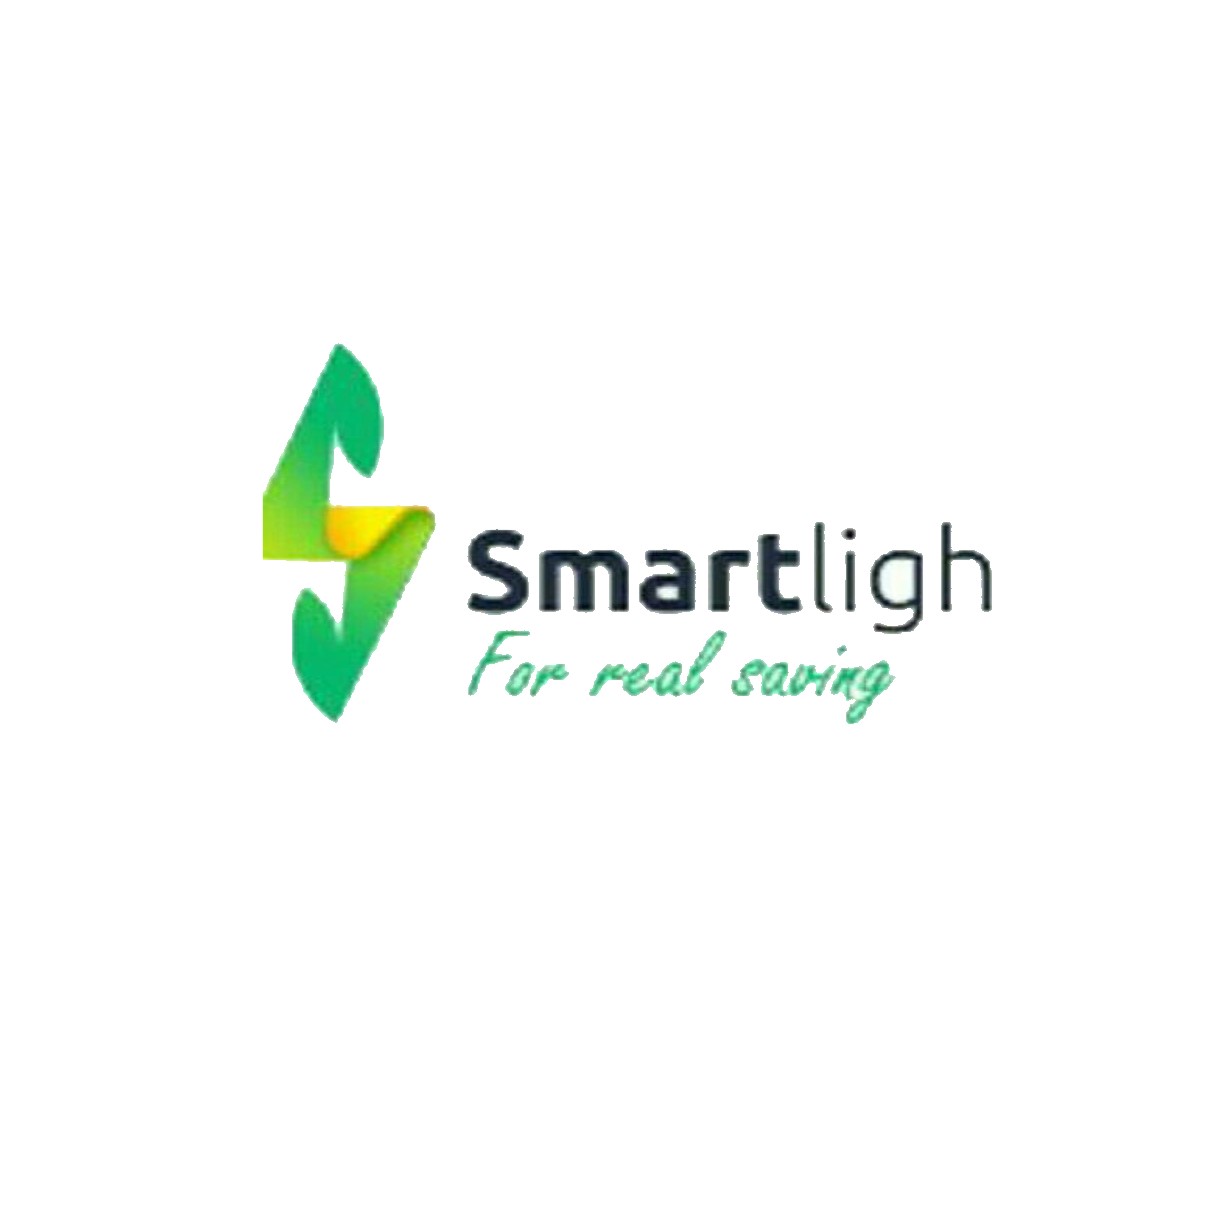 Smart lighting company